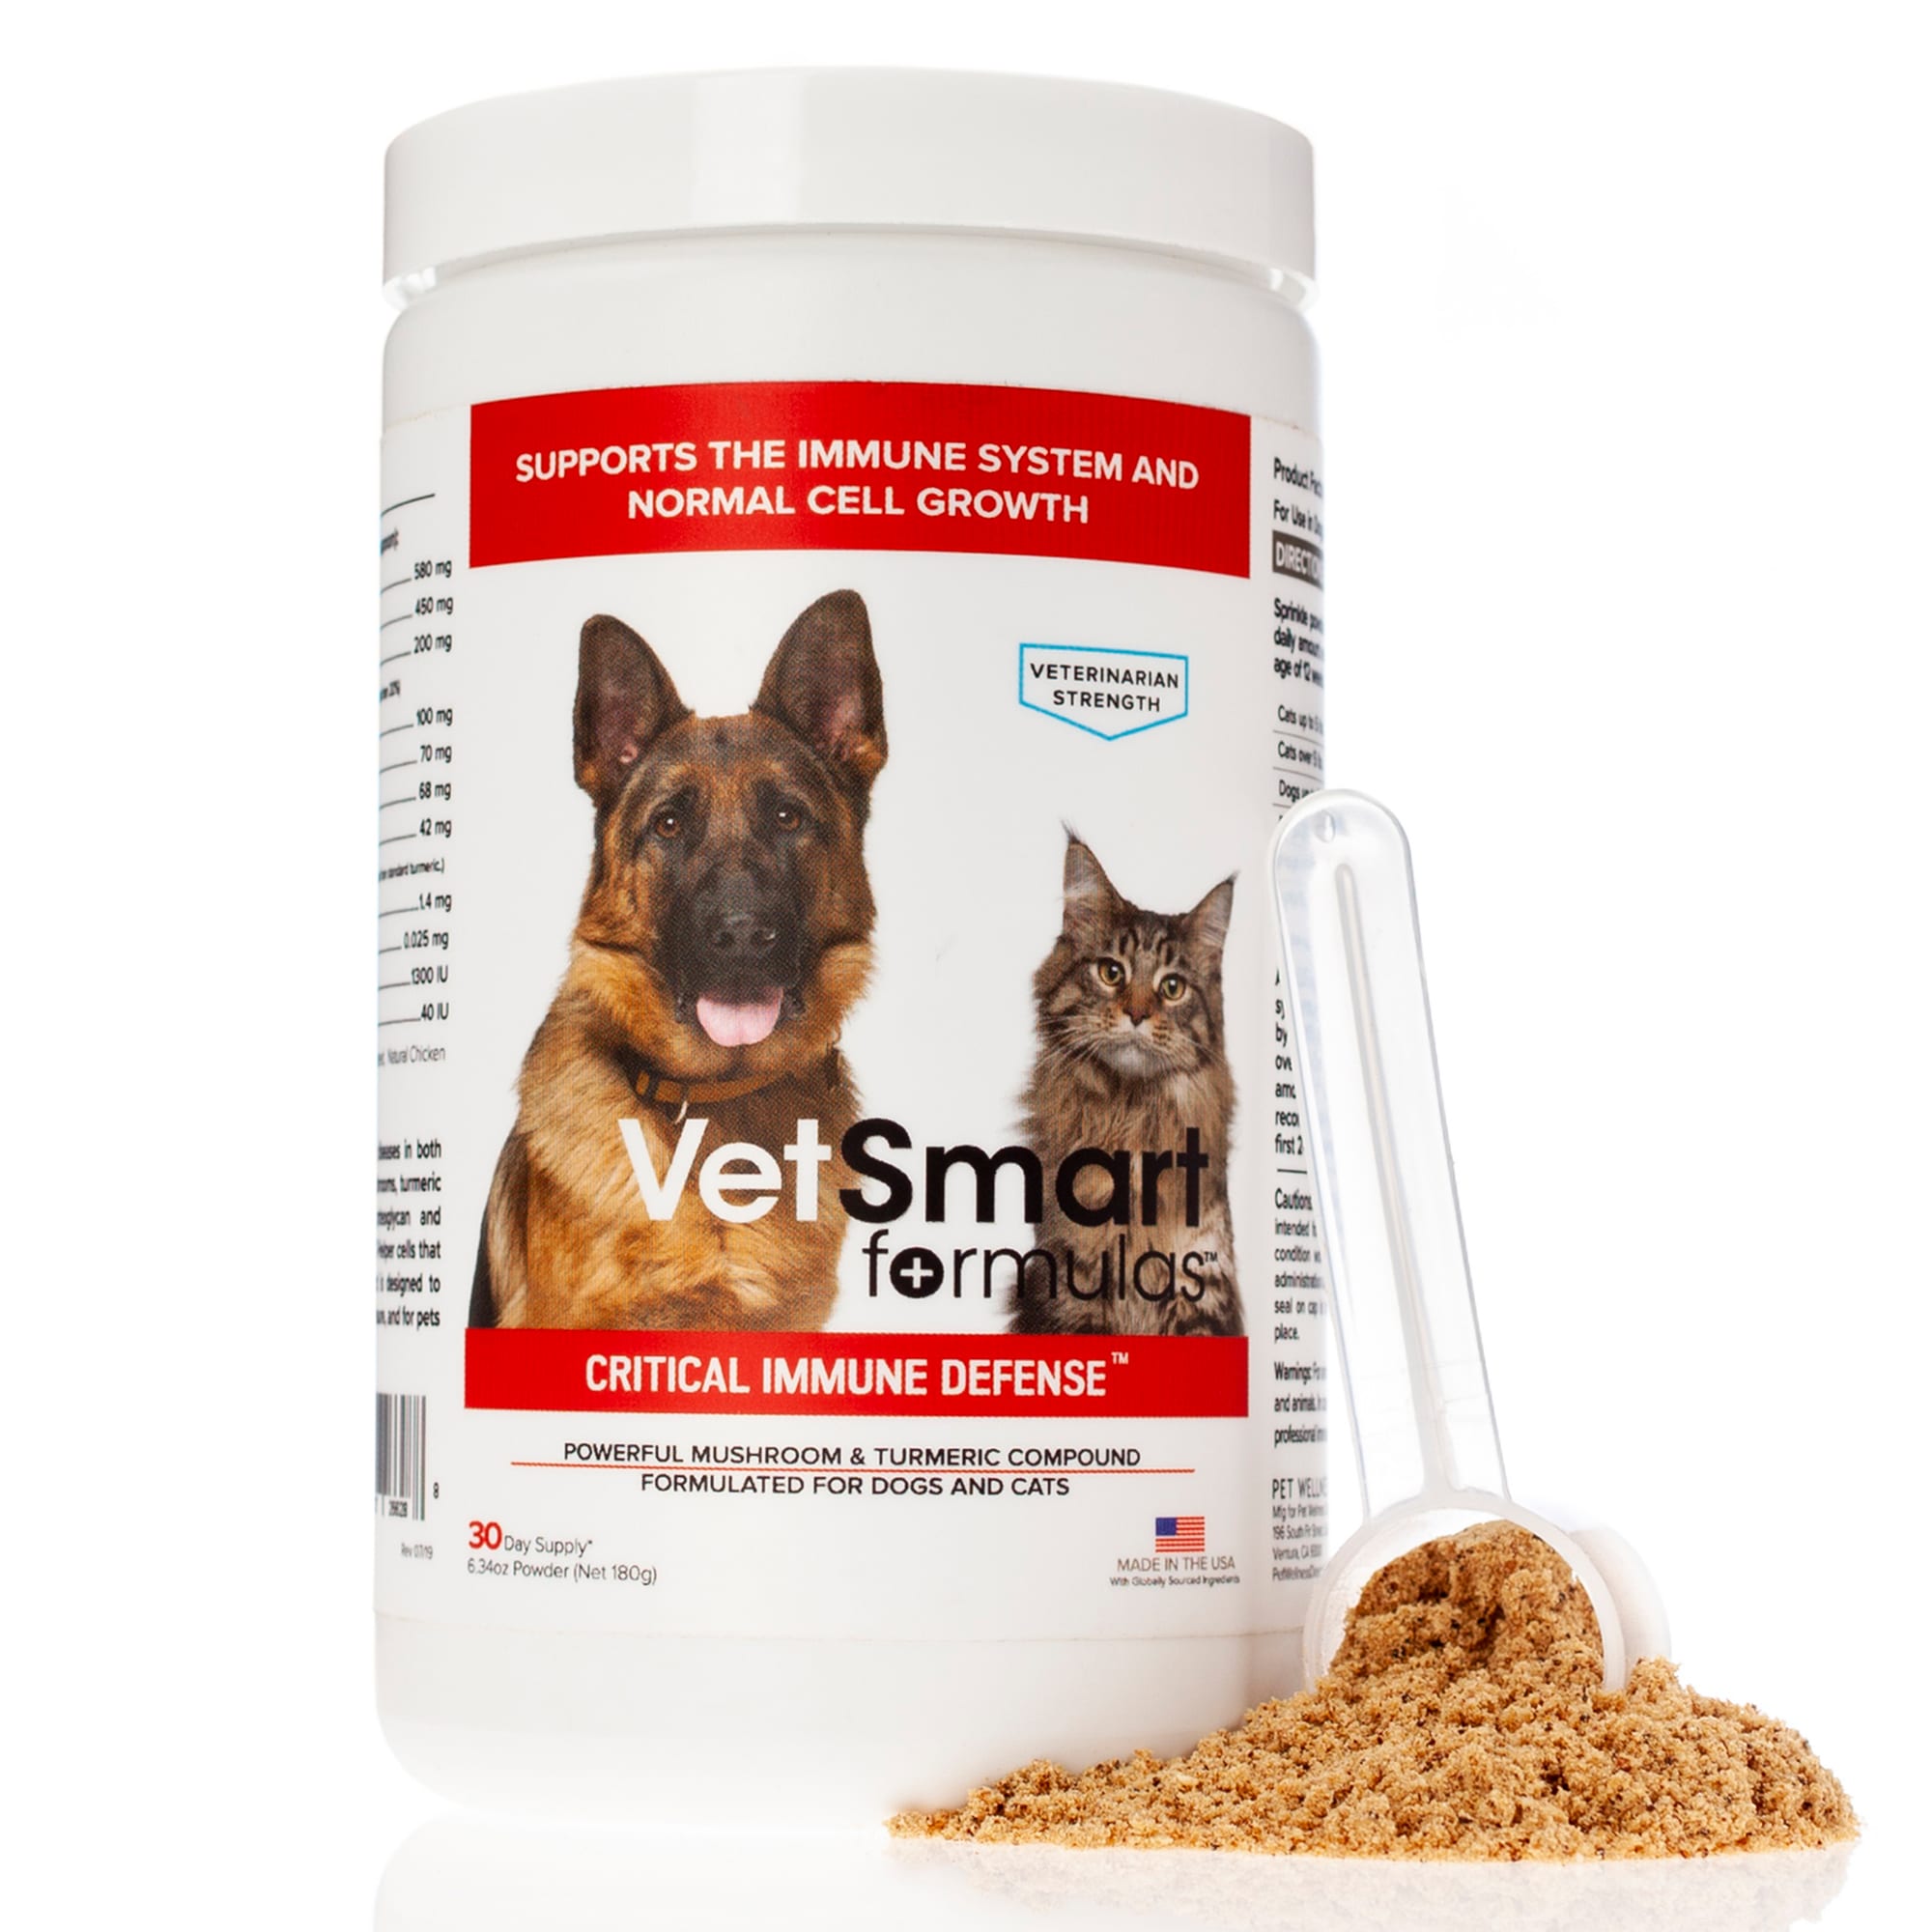 VetSmart Formulas Mushroom and Turmeric Critical Immune Defense for Dogs and Cats